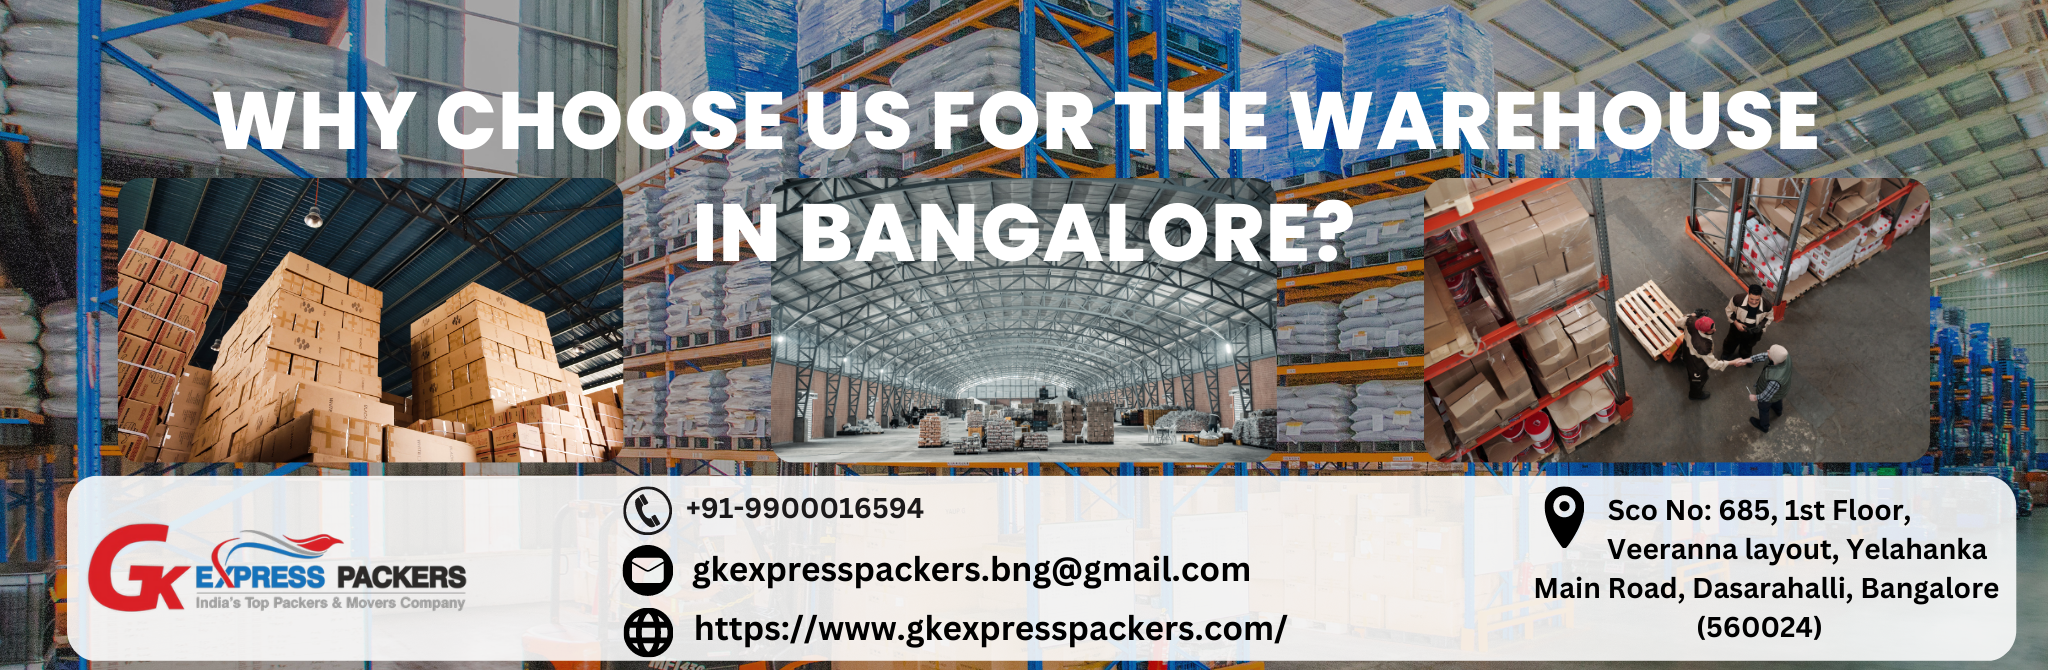 Warehouse in Bangalore